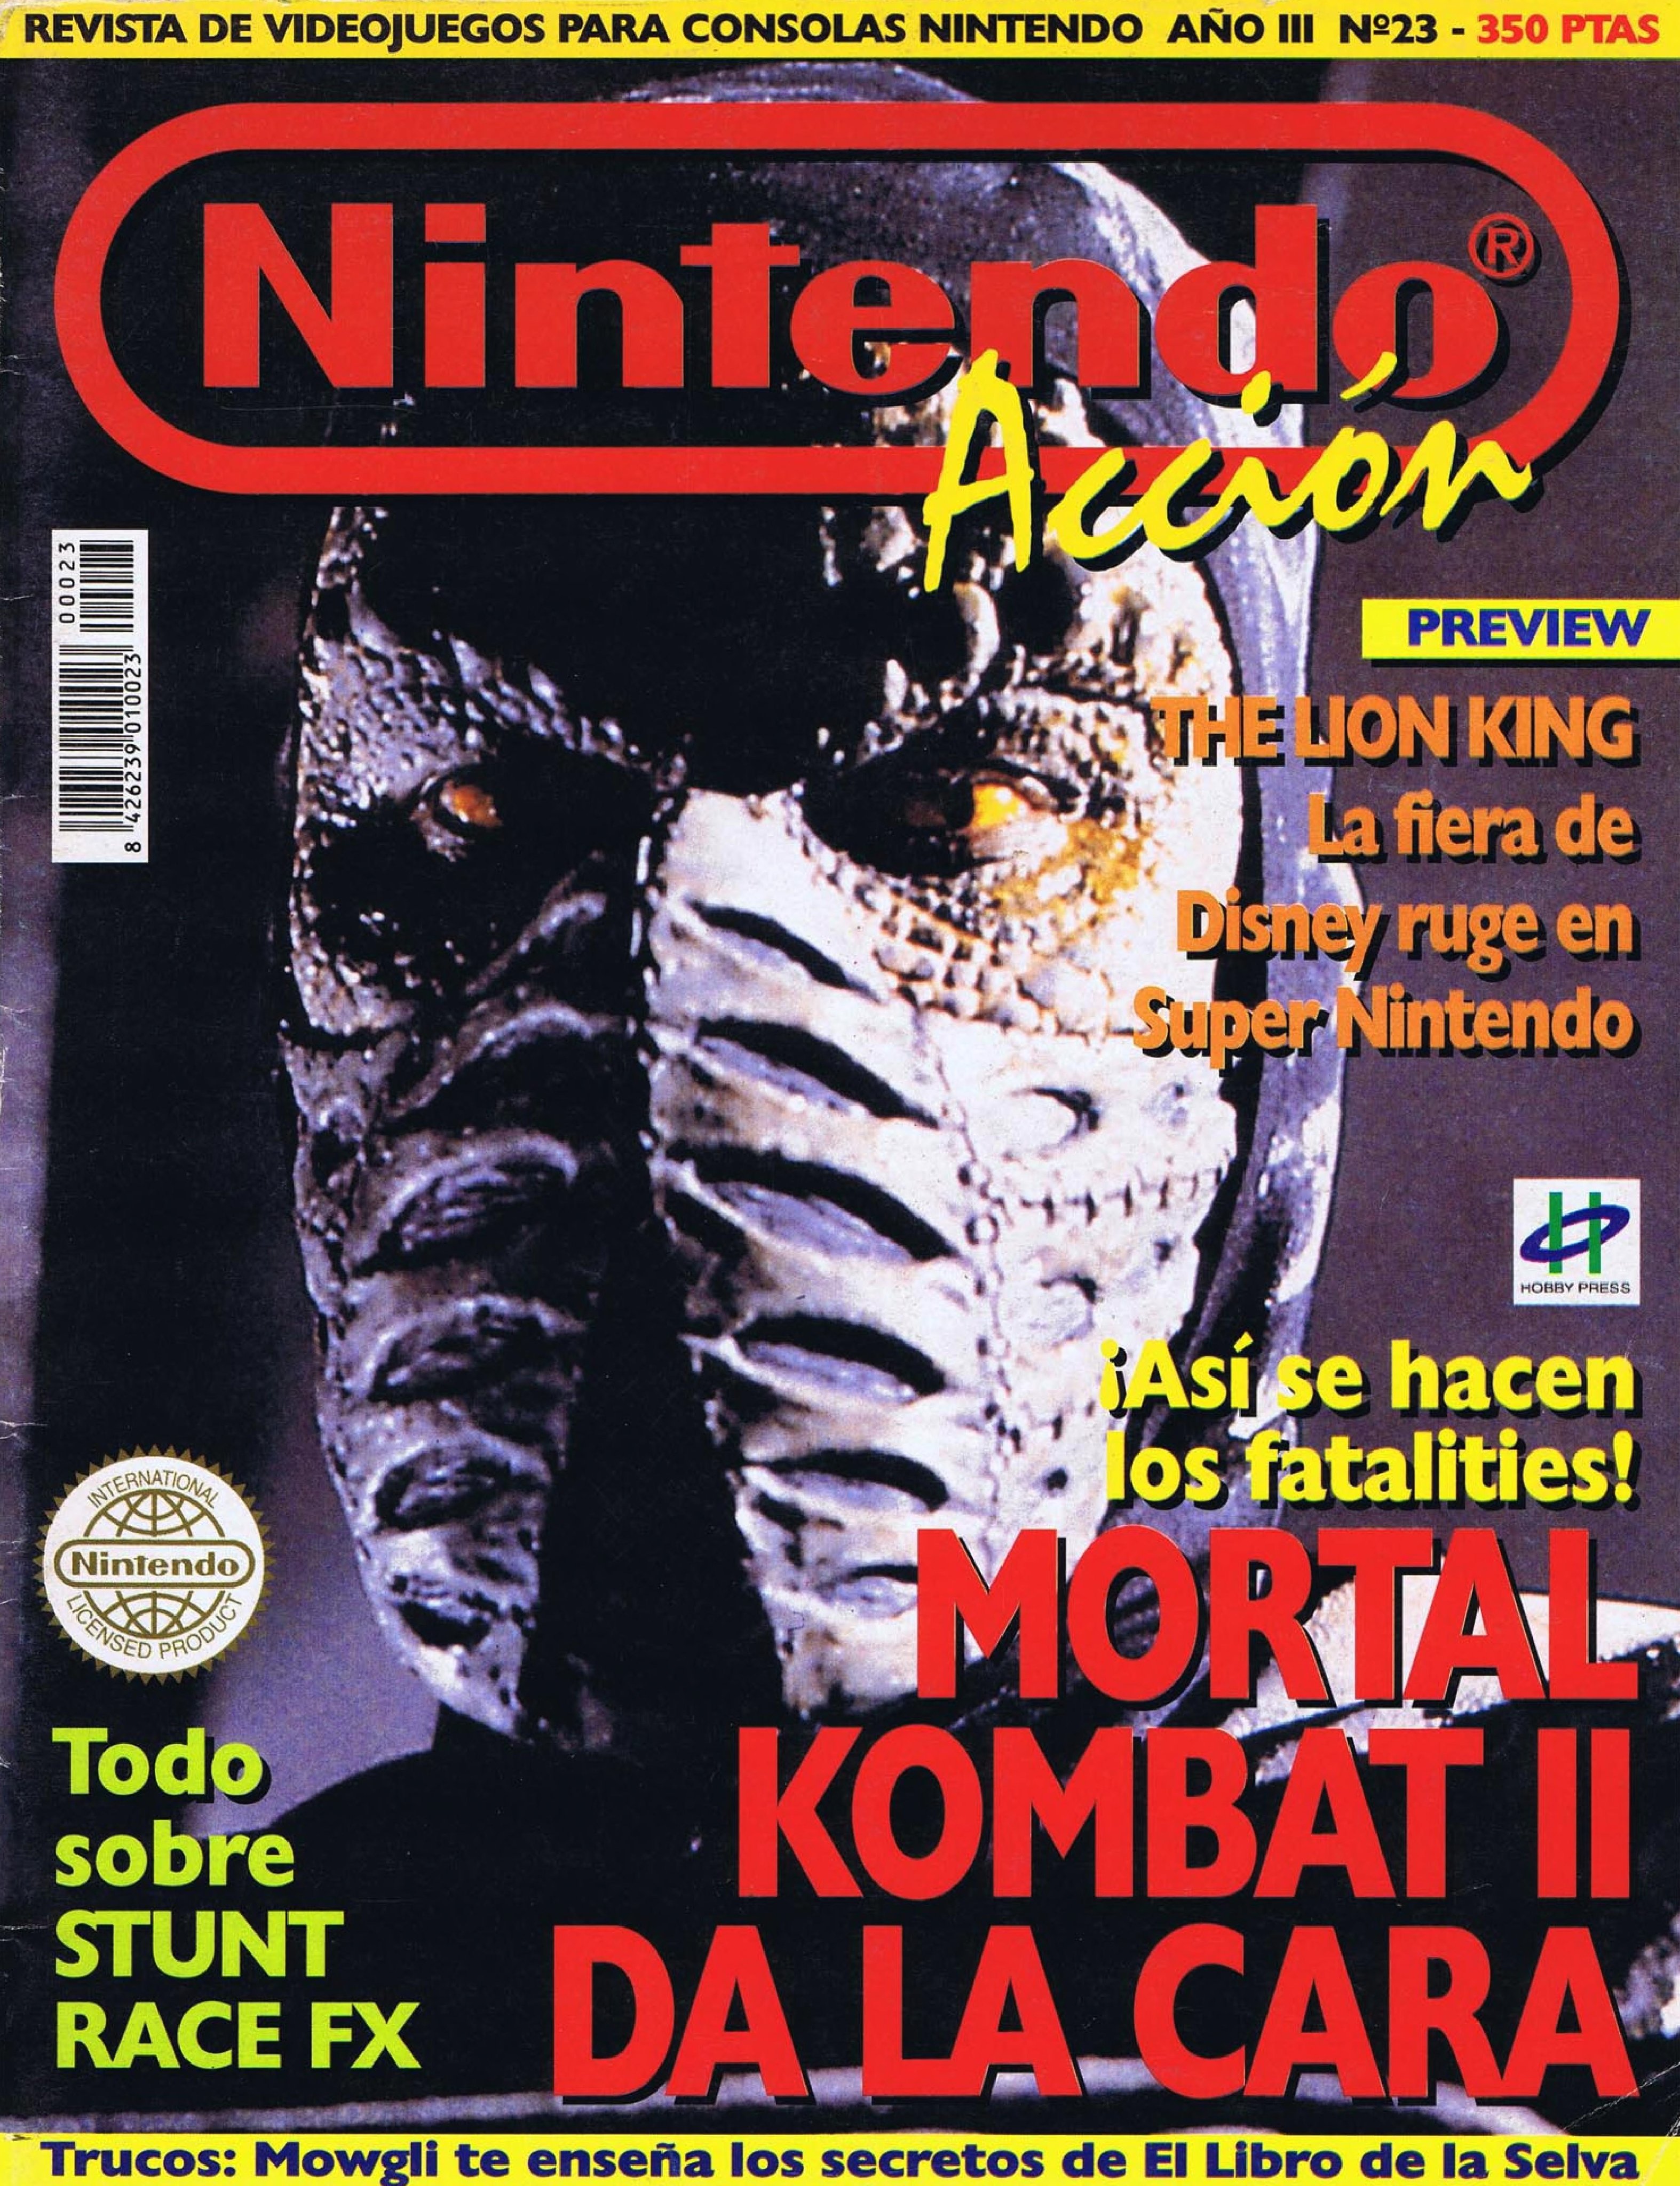 Mortal Kombat II Kollectors Magazine (1994) comic books 1992-1994, mortal  kombat fatalities 1992 